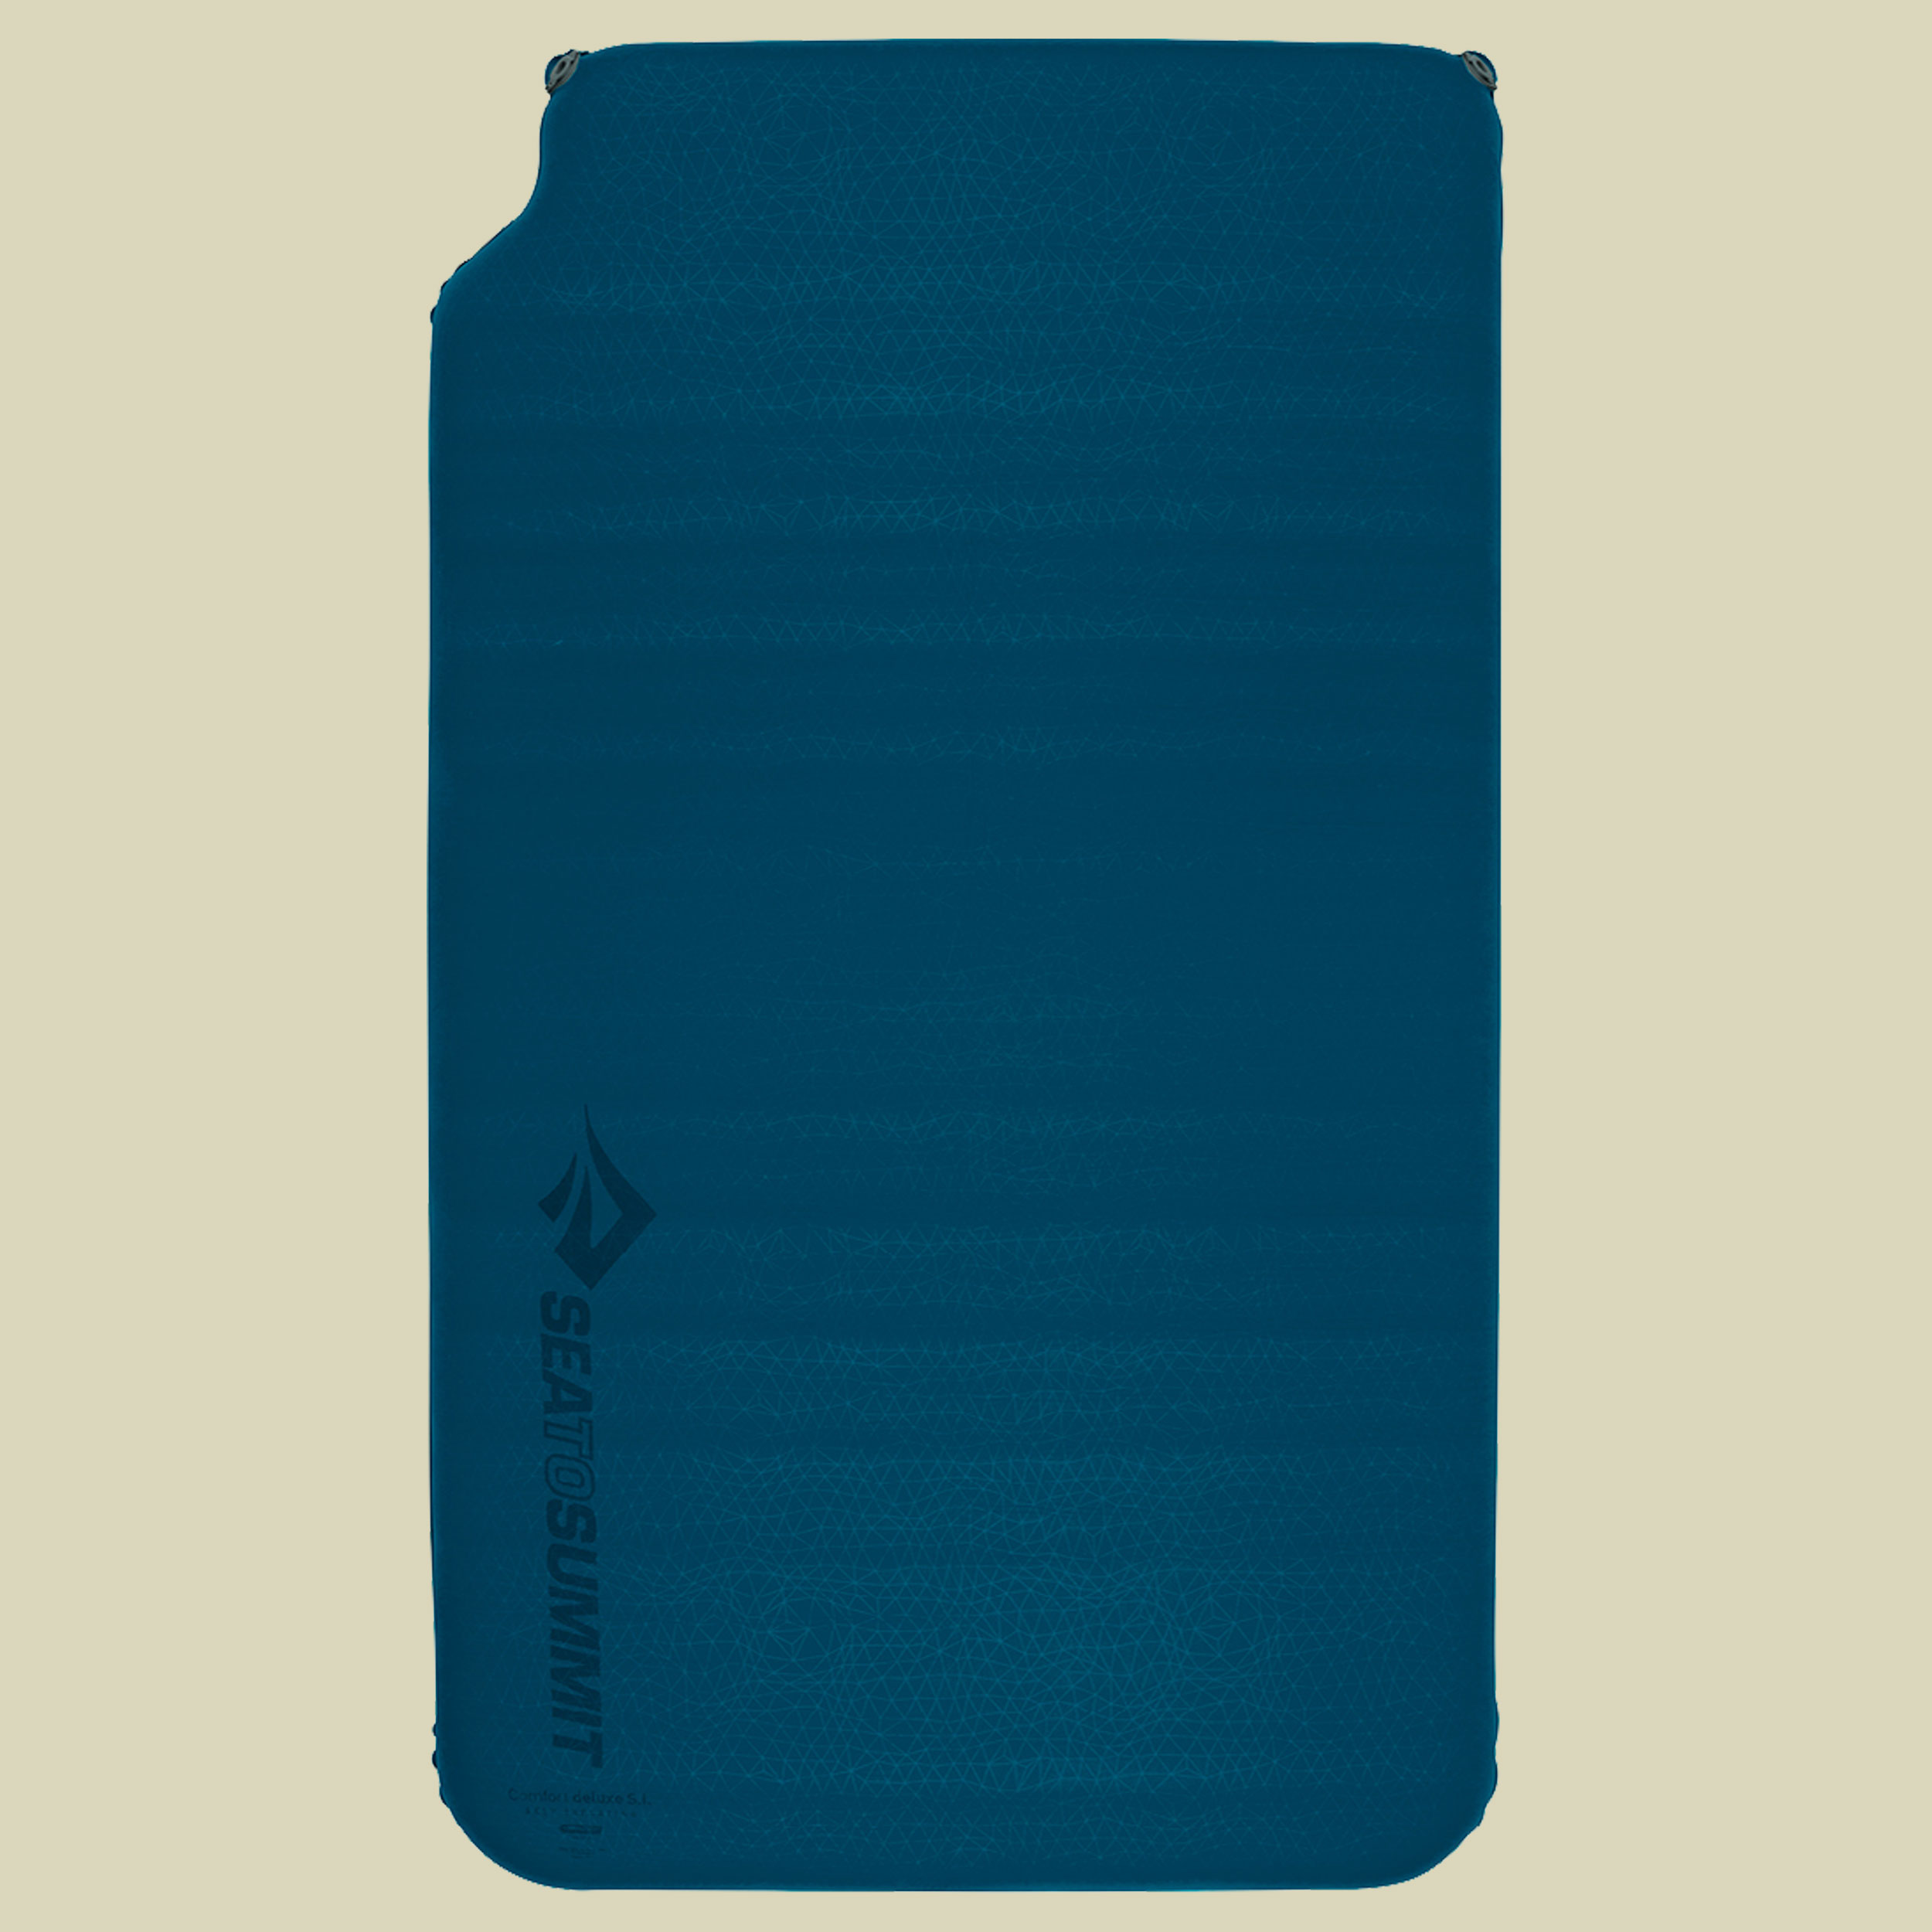 Comfort Deluxe S.I. Camper Van Maße: 201 x 115 cm Farbe: byron blue